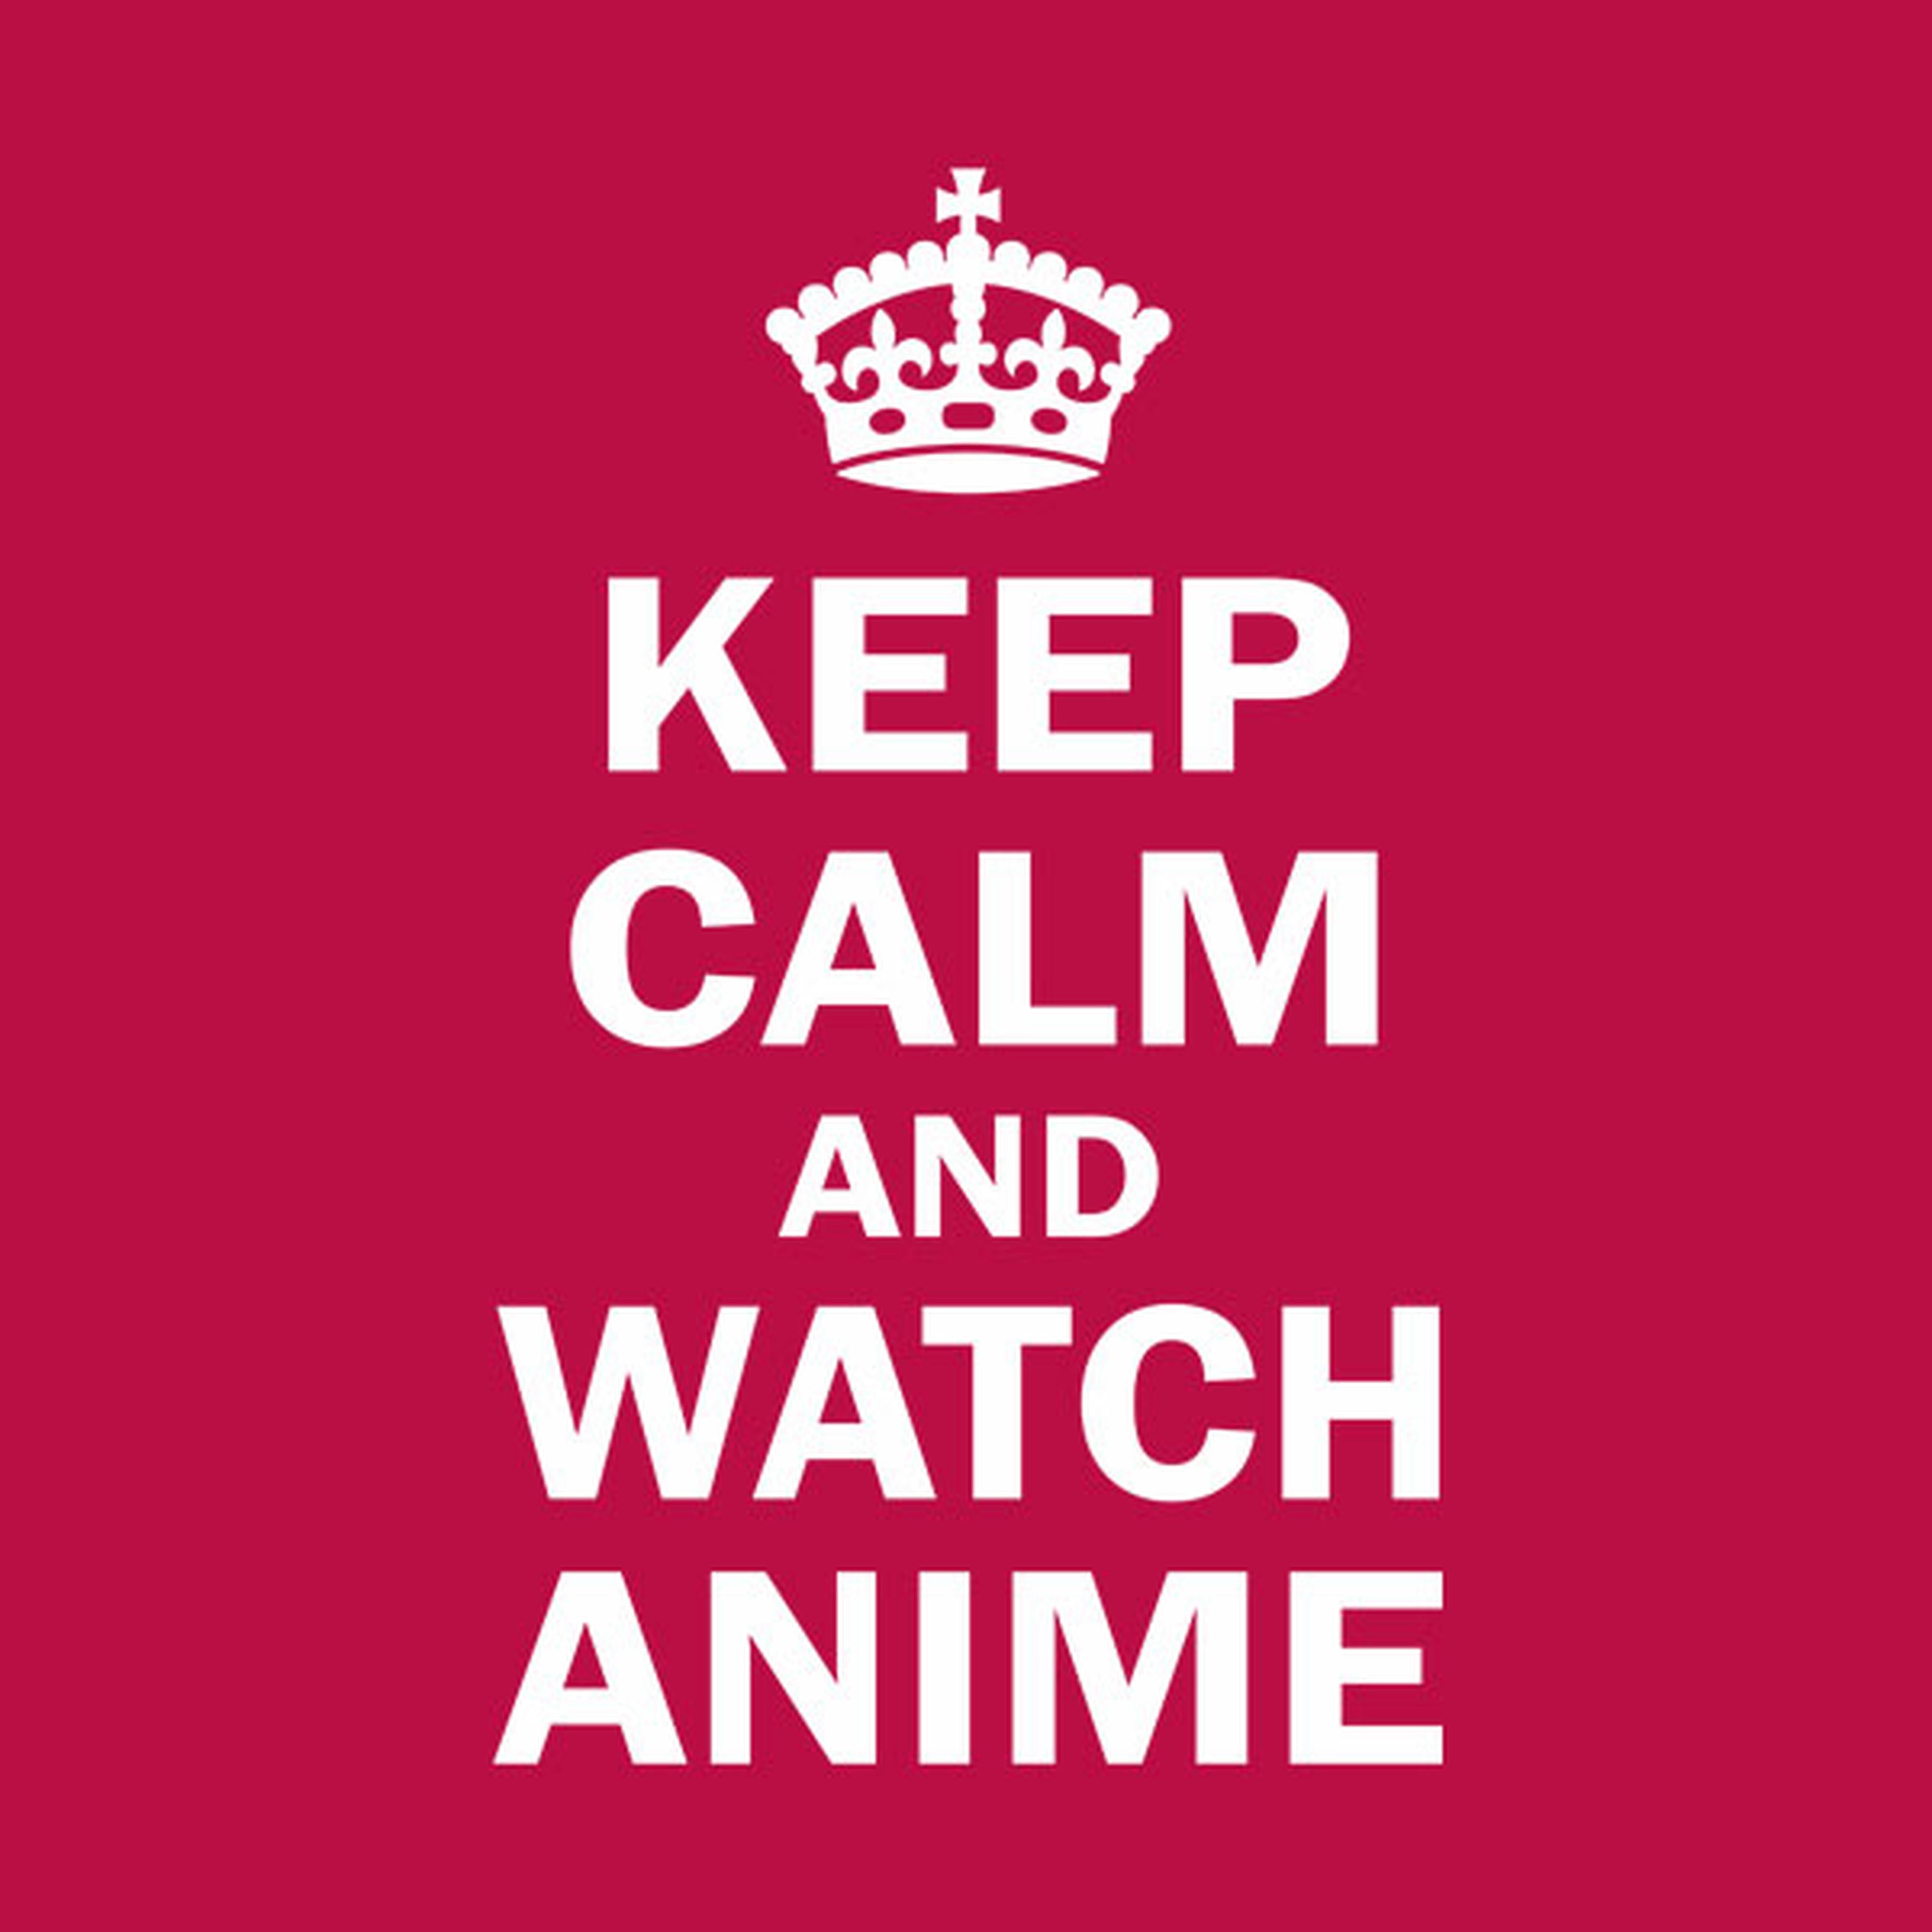 Keep calm and watch anime - T-shirt